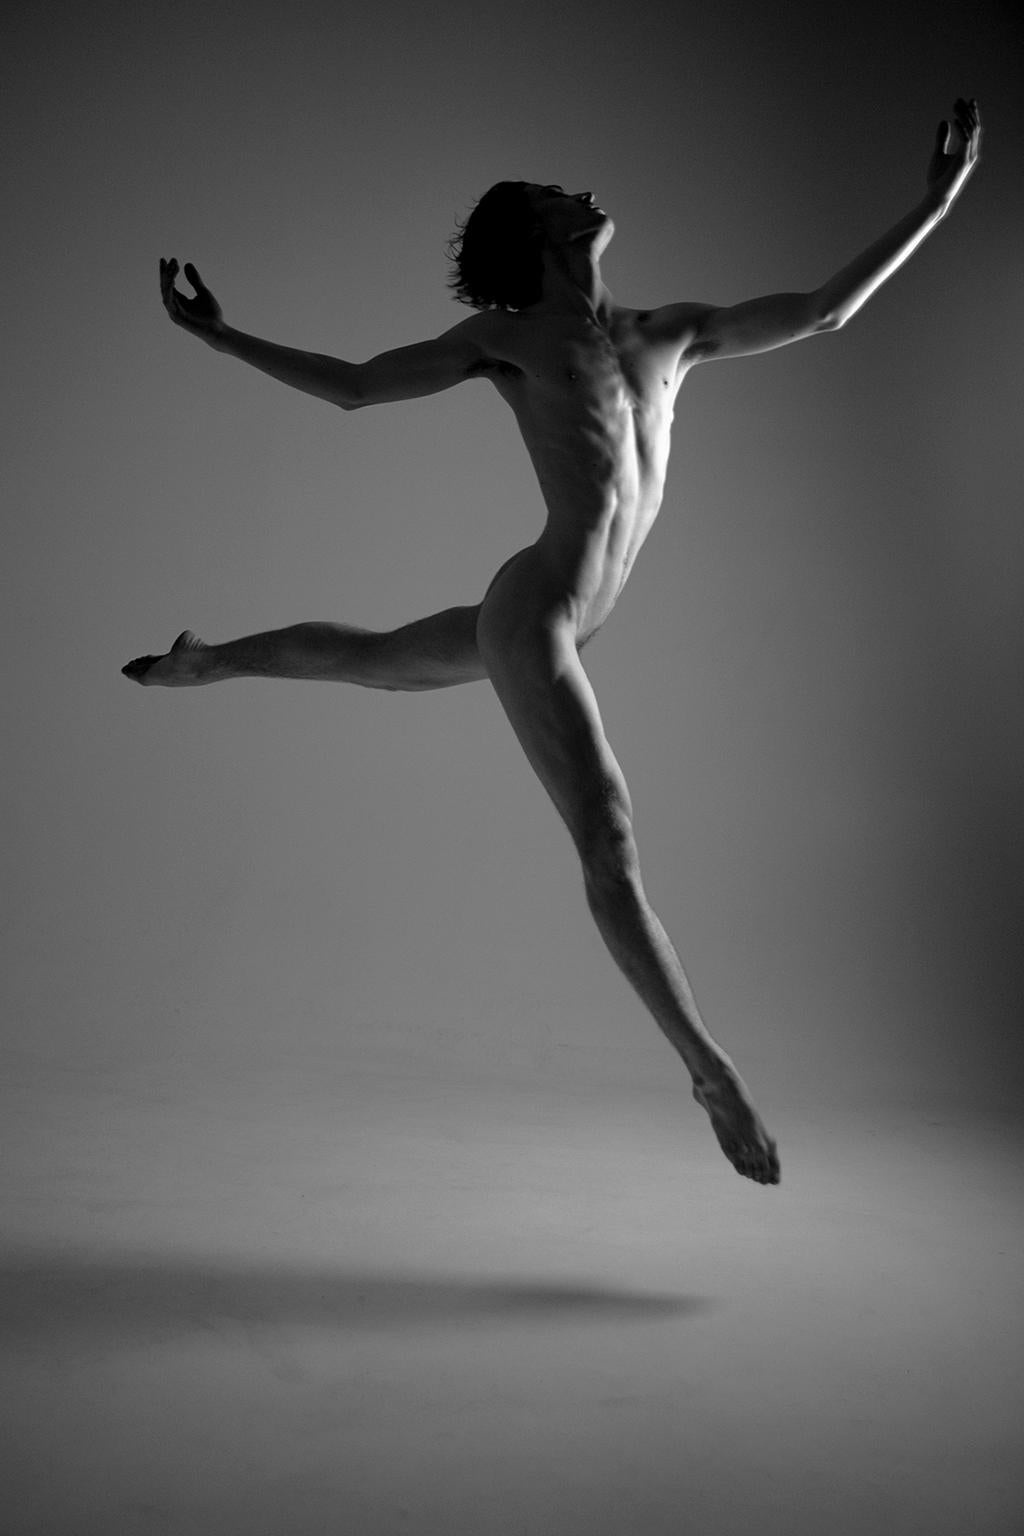 Ricky Cohete Nude Photograph - Apertura. The Bailarín, series. Male Nude dancer. Black & White photograph